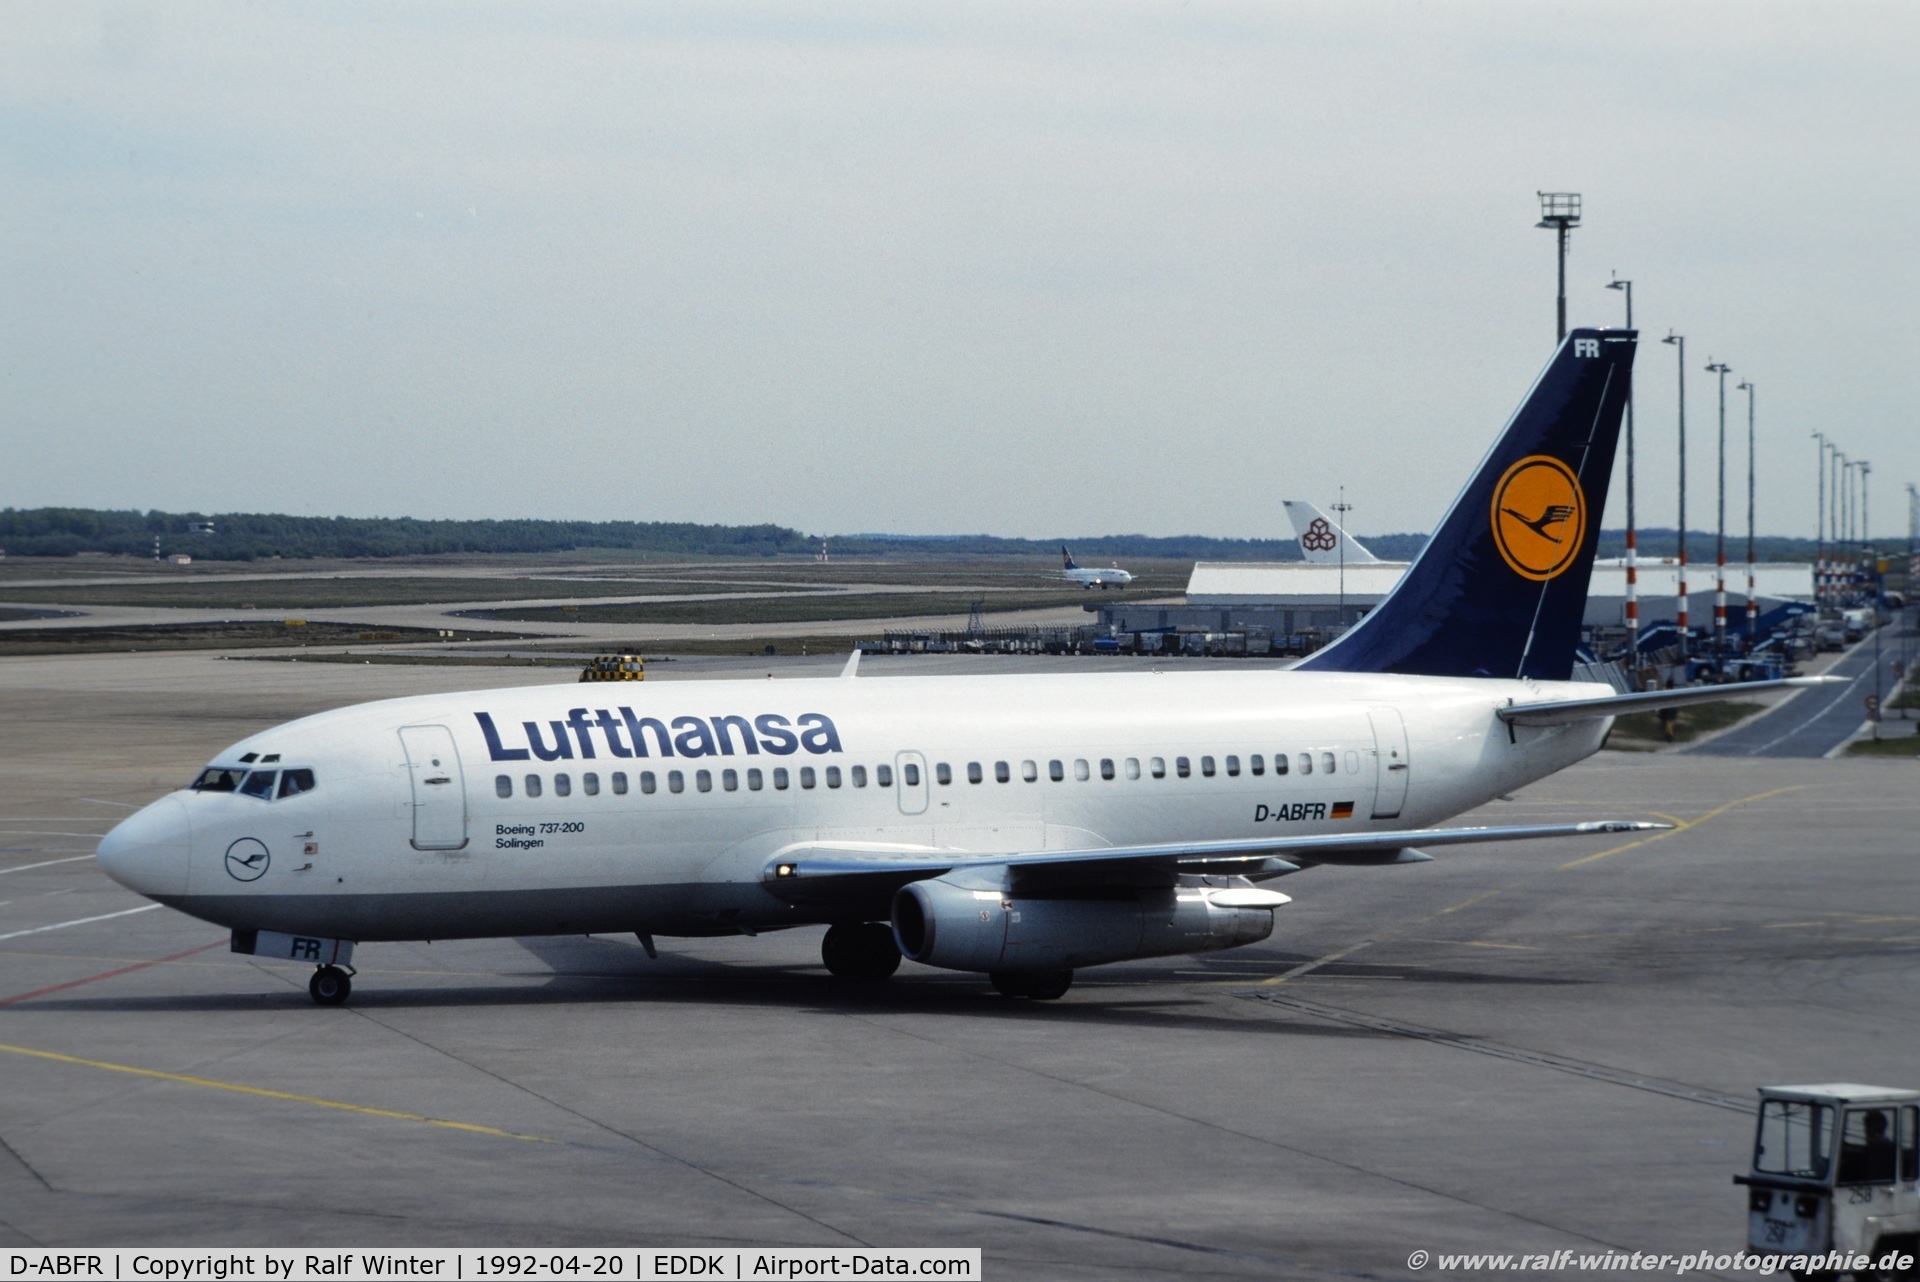 D-ABFR, 1981 Boeing 737-230 C/N 22124, Boeing 737-230 - Lufthansa 'Solingen' - D-ABFR - 20.04.1992 - CGN